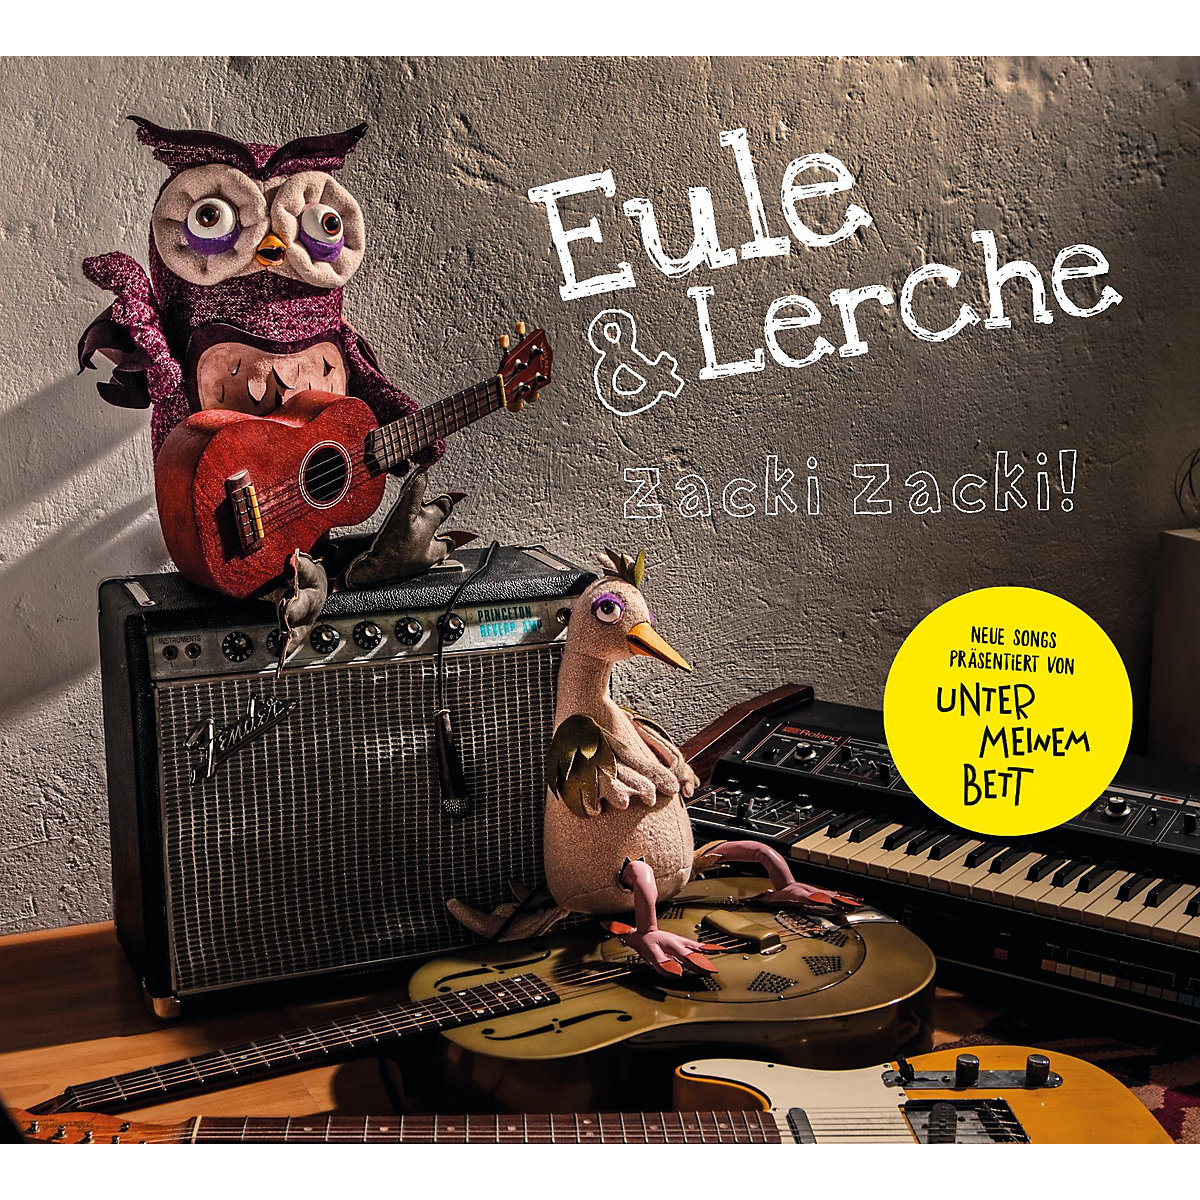 CD Eule und Lerche Zacki Zacki